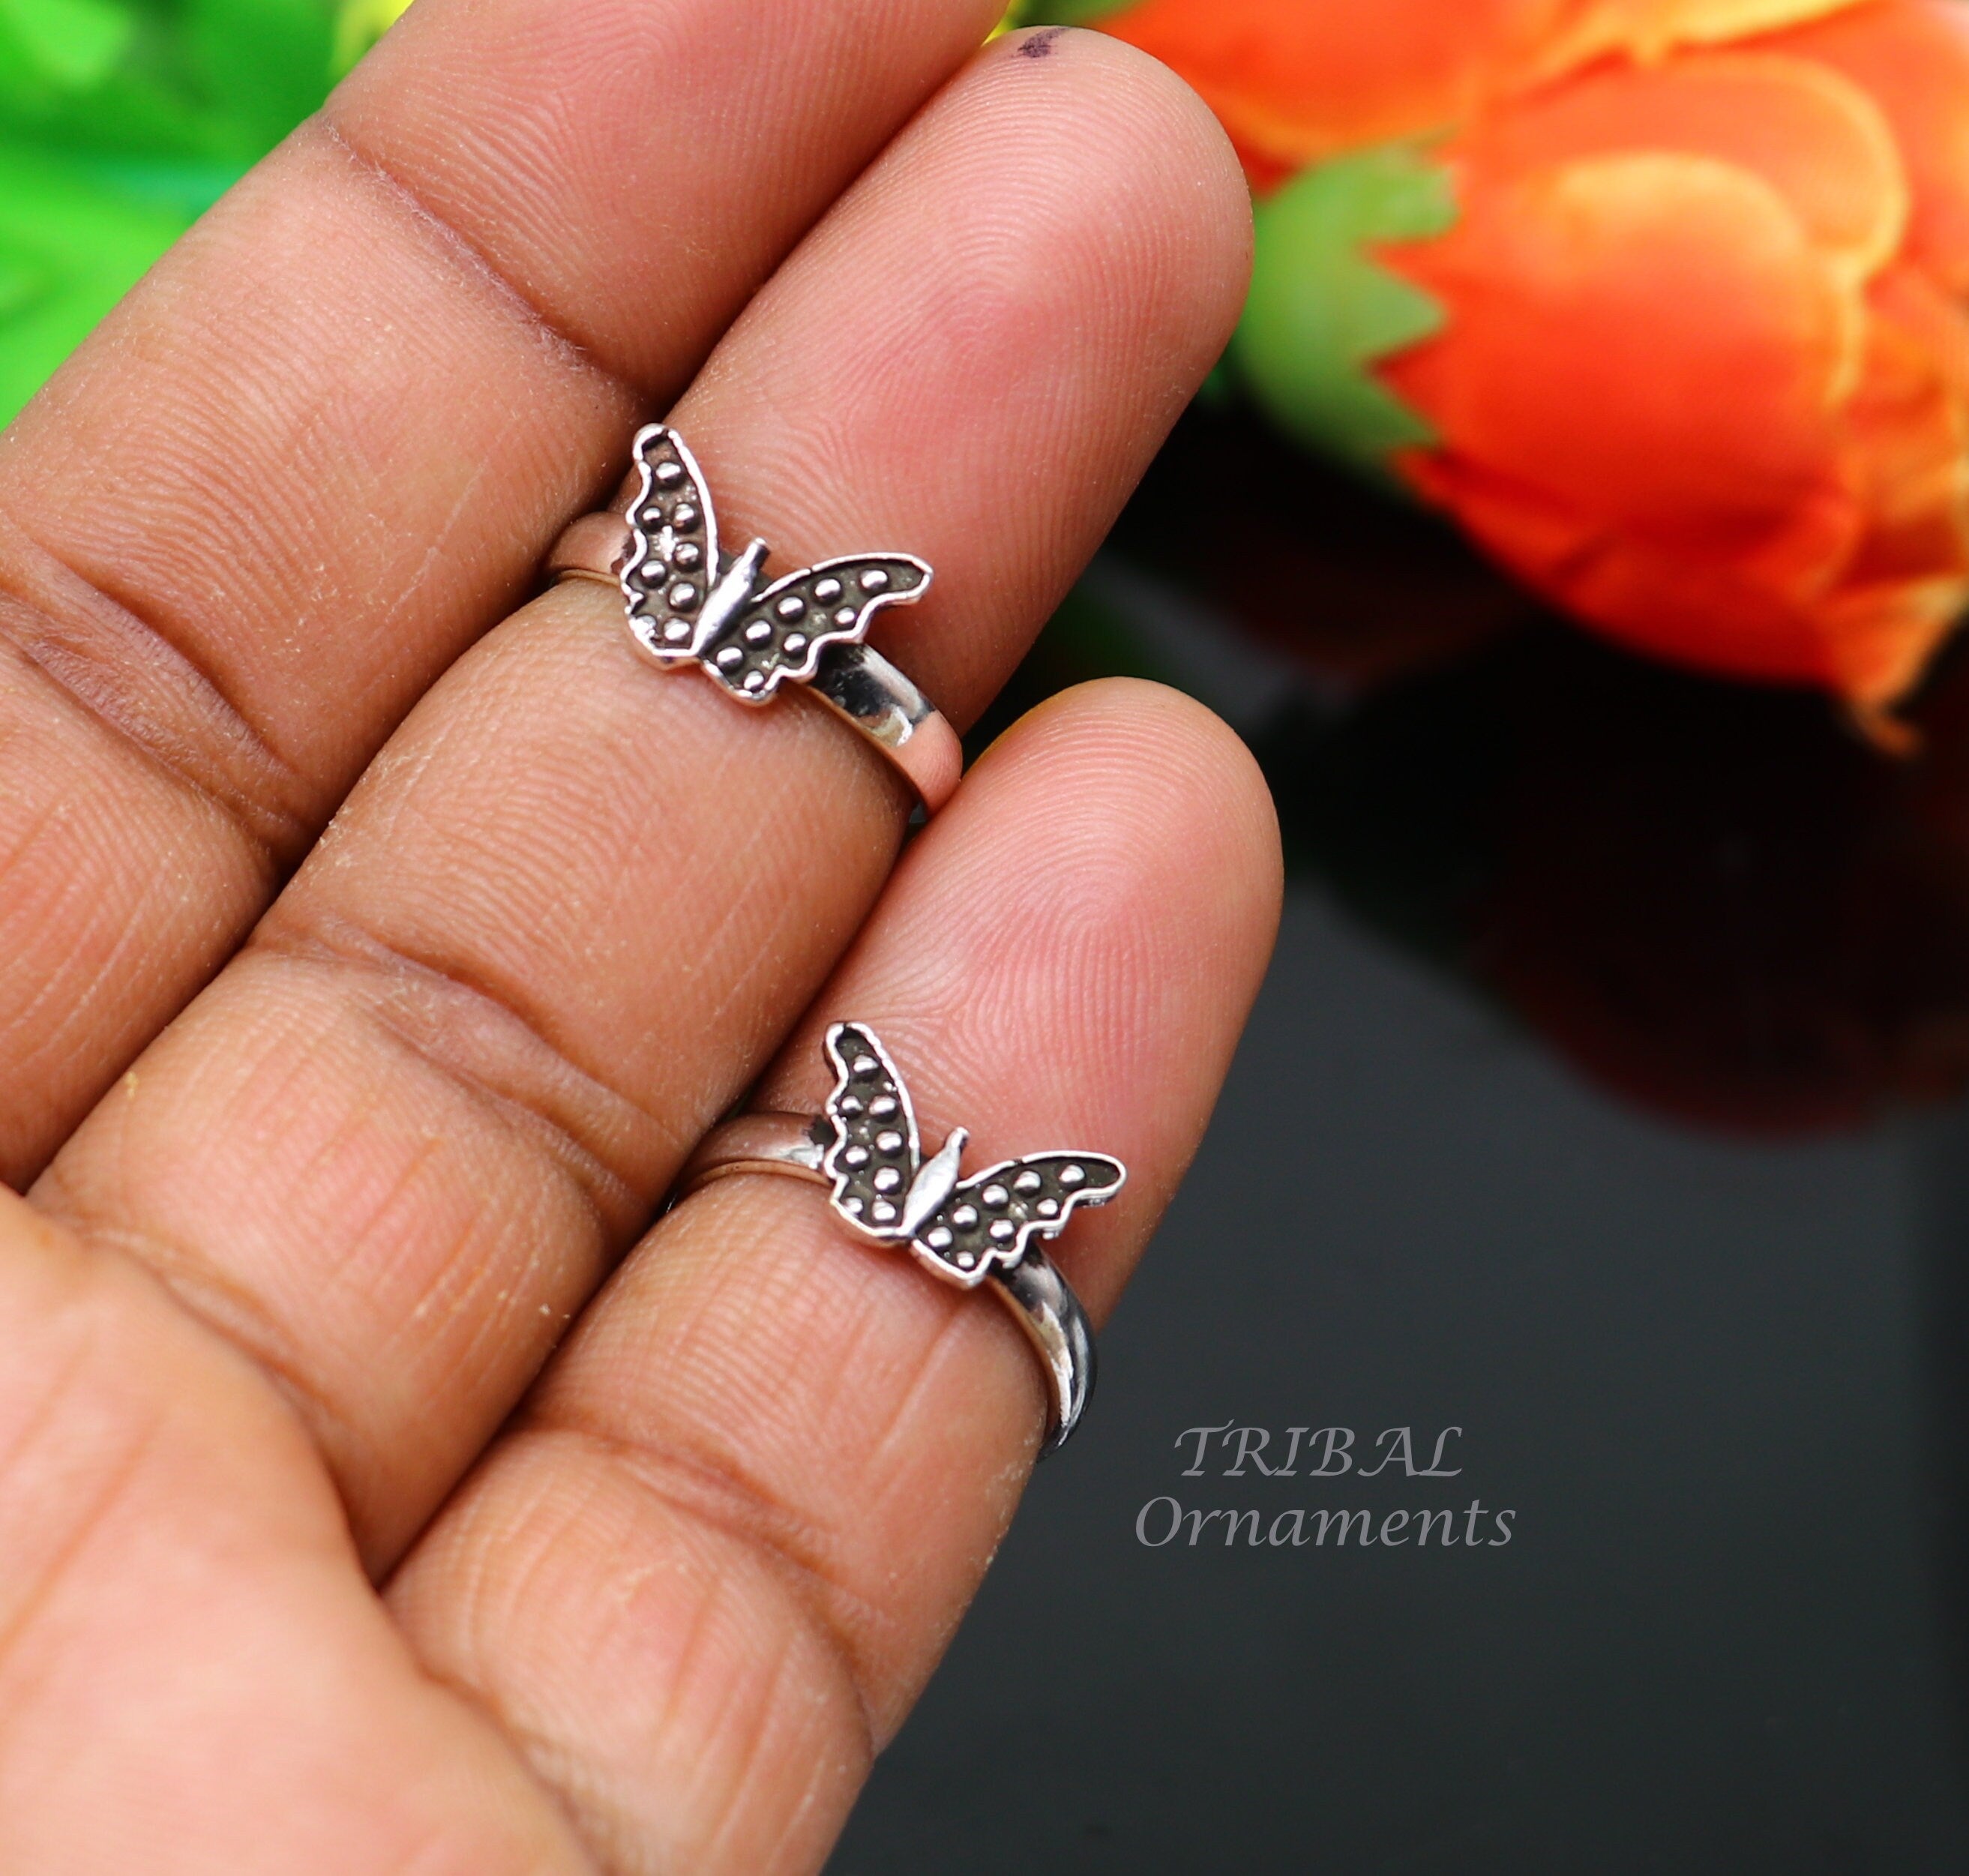 Oxidized Pure Silver Cute Butterfly Finger Fashion Ring at Rs 100/gram |  Vidhyadhar Nagar | Jaipur | ID: 26272004430